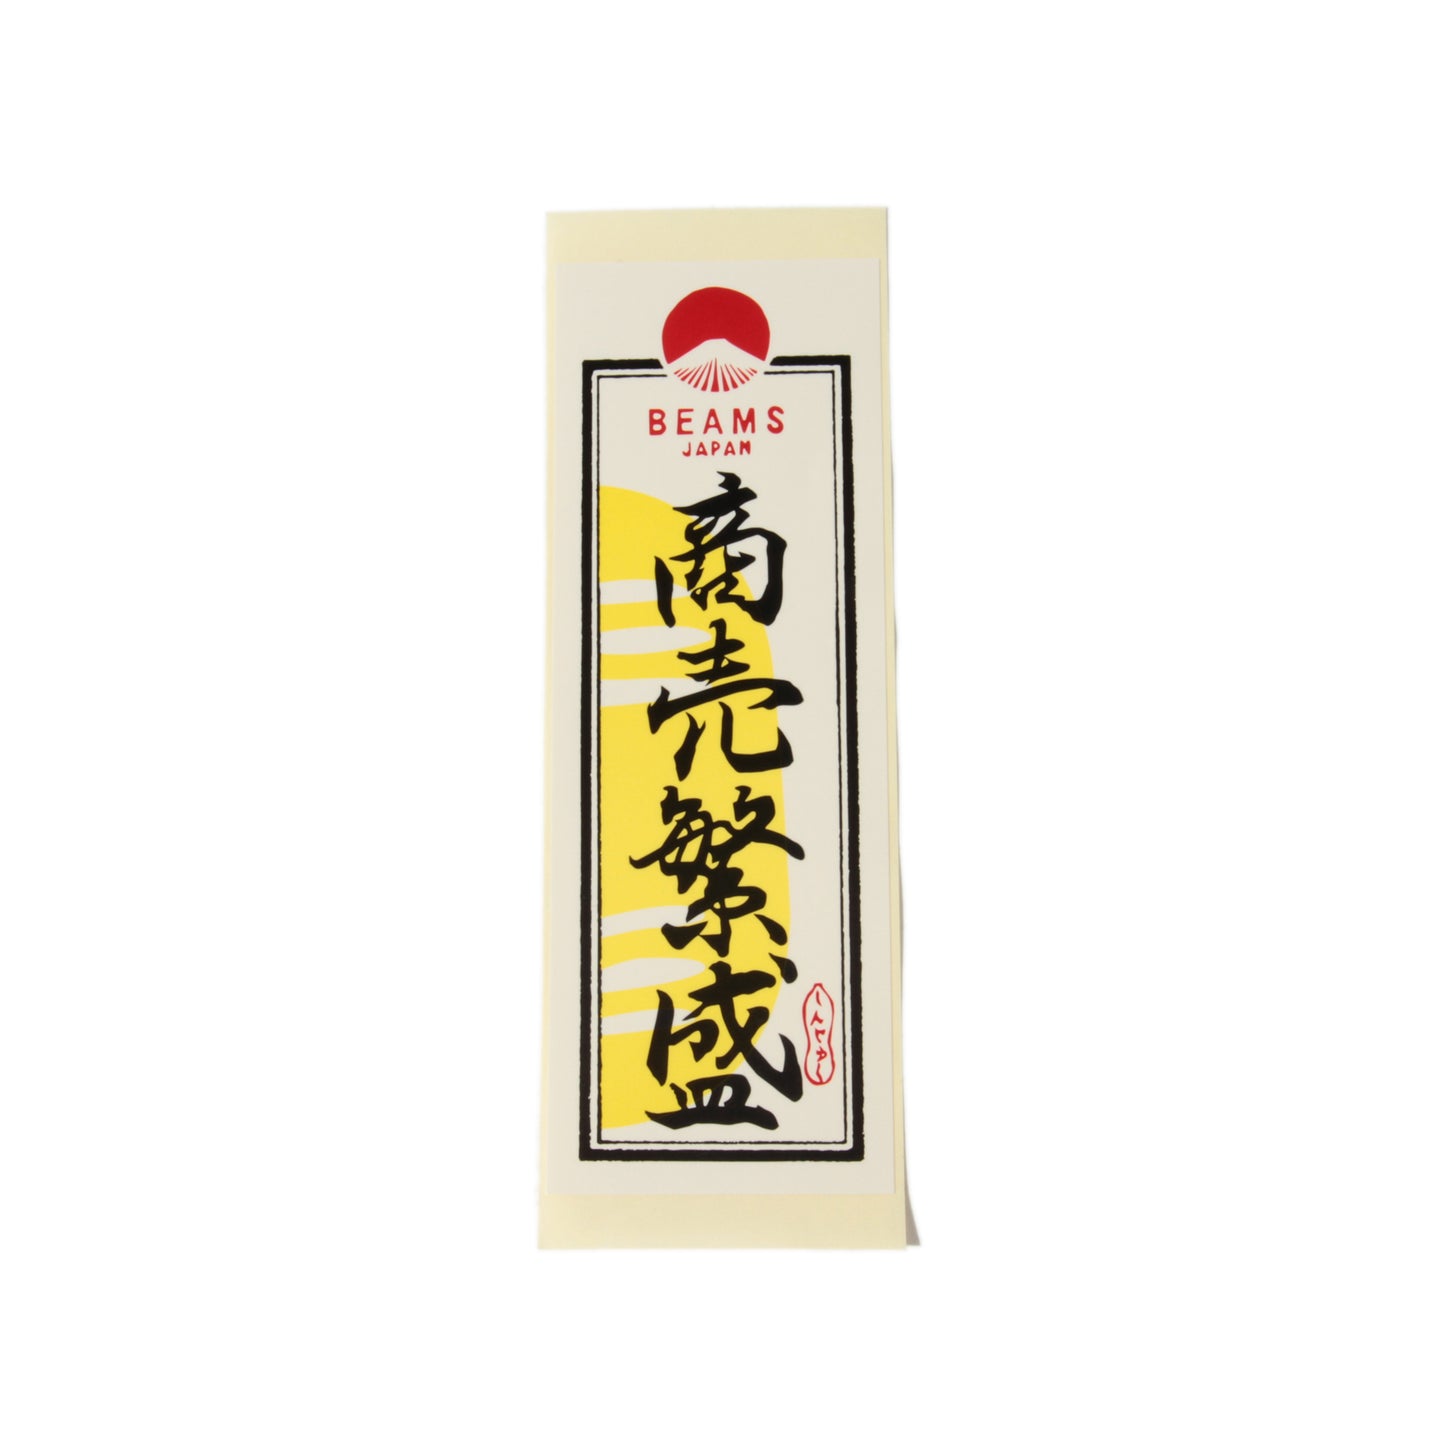 BEAMS JAPAN Amulet Sticker - Good Business